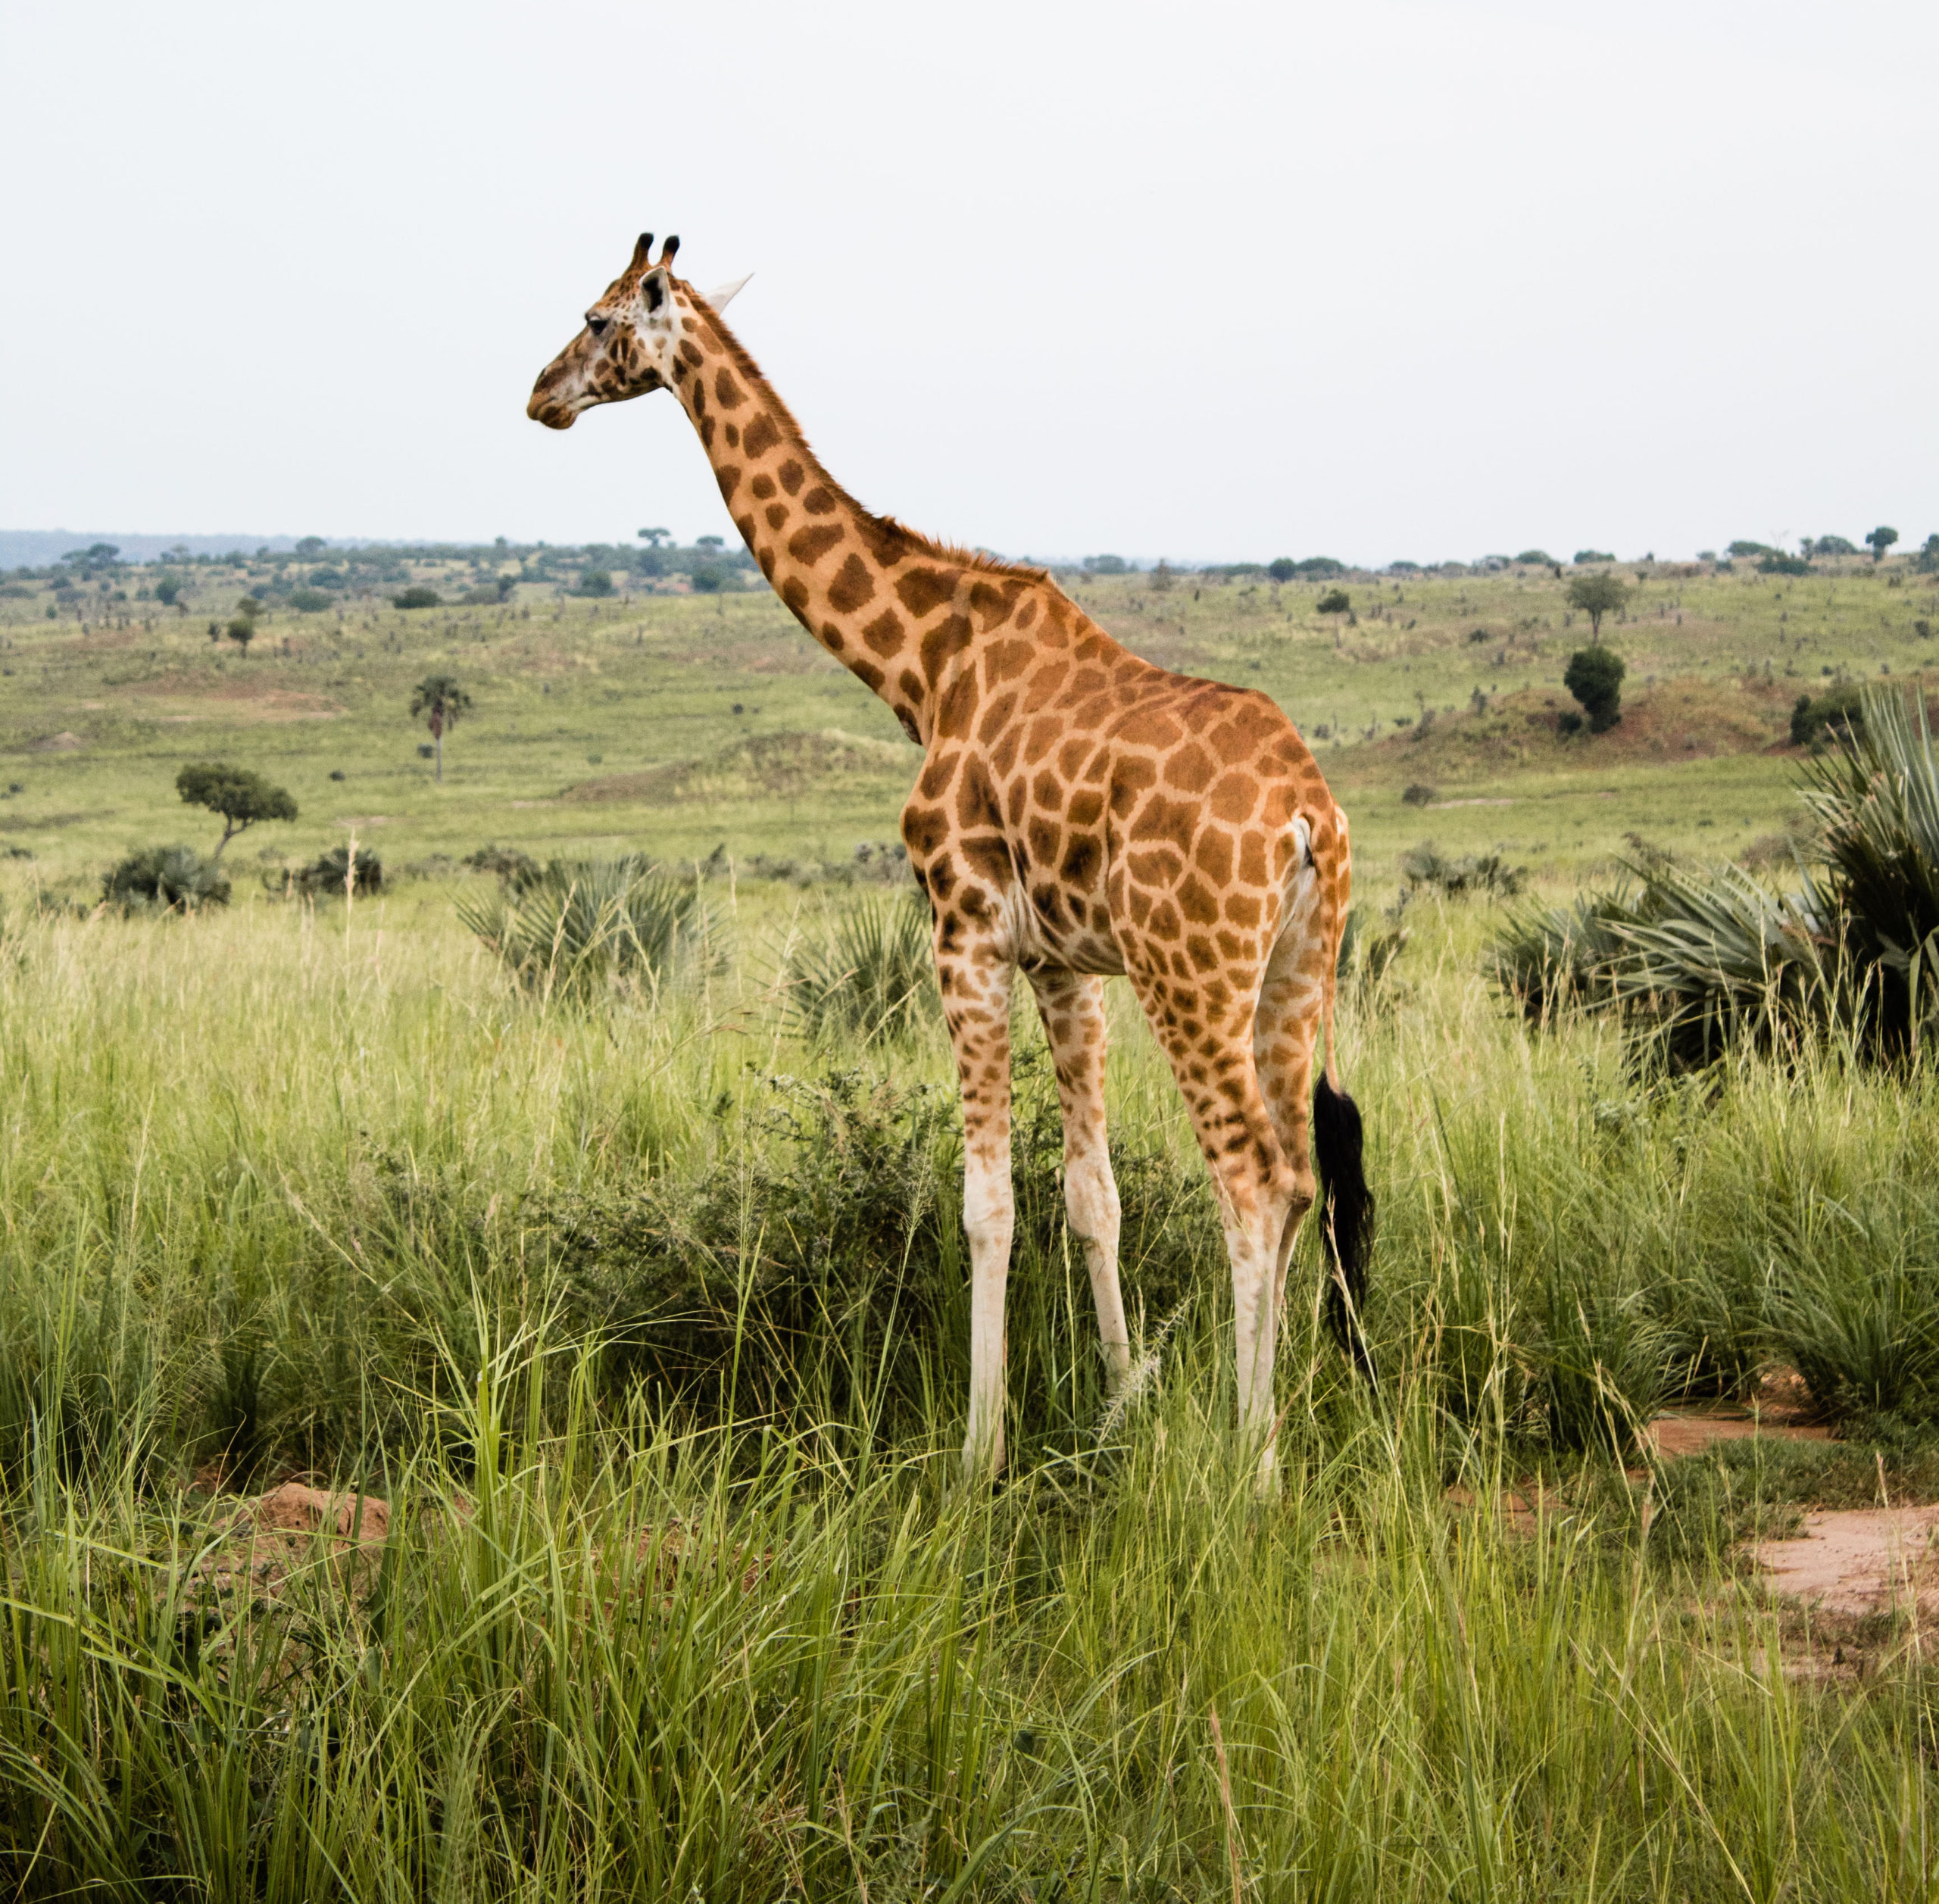 Giraffe stands in the savanna grass in Uganda